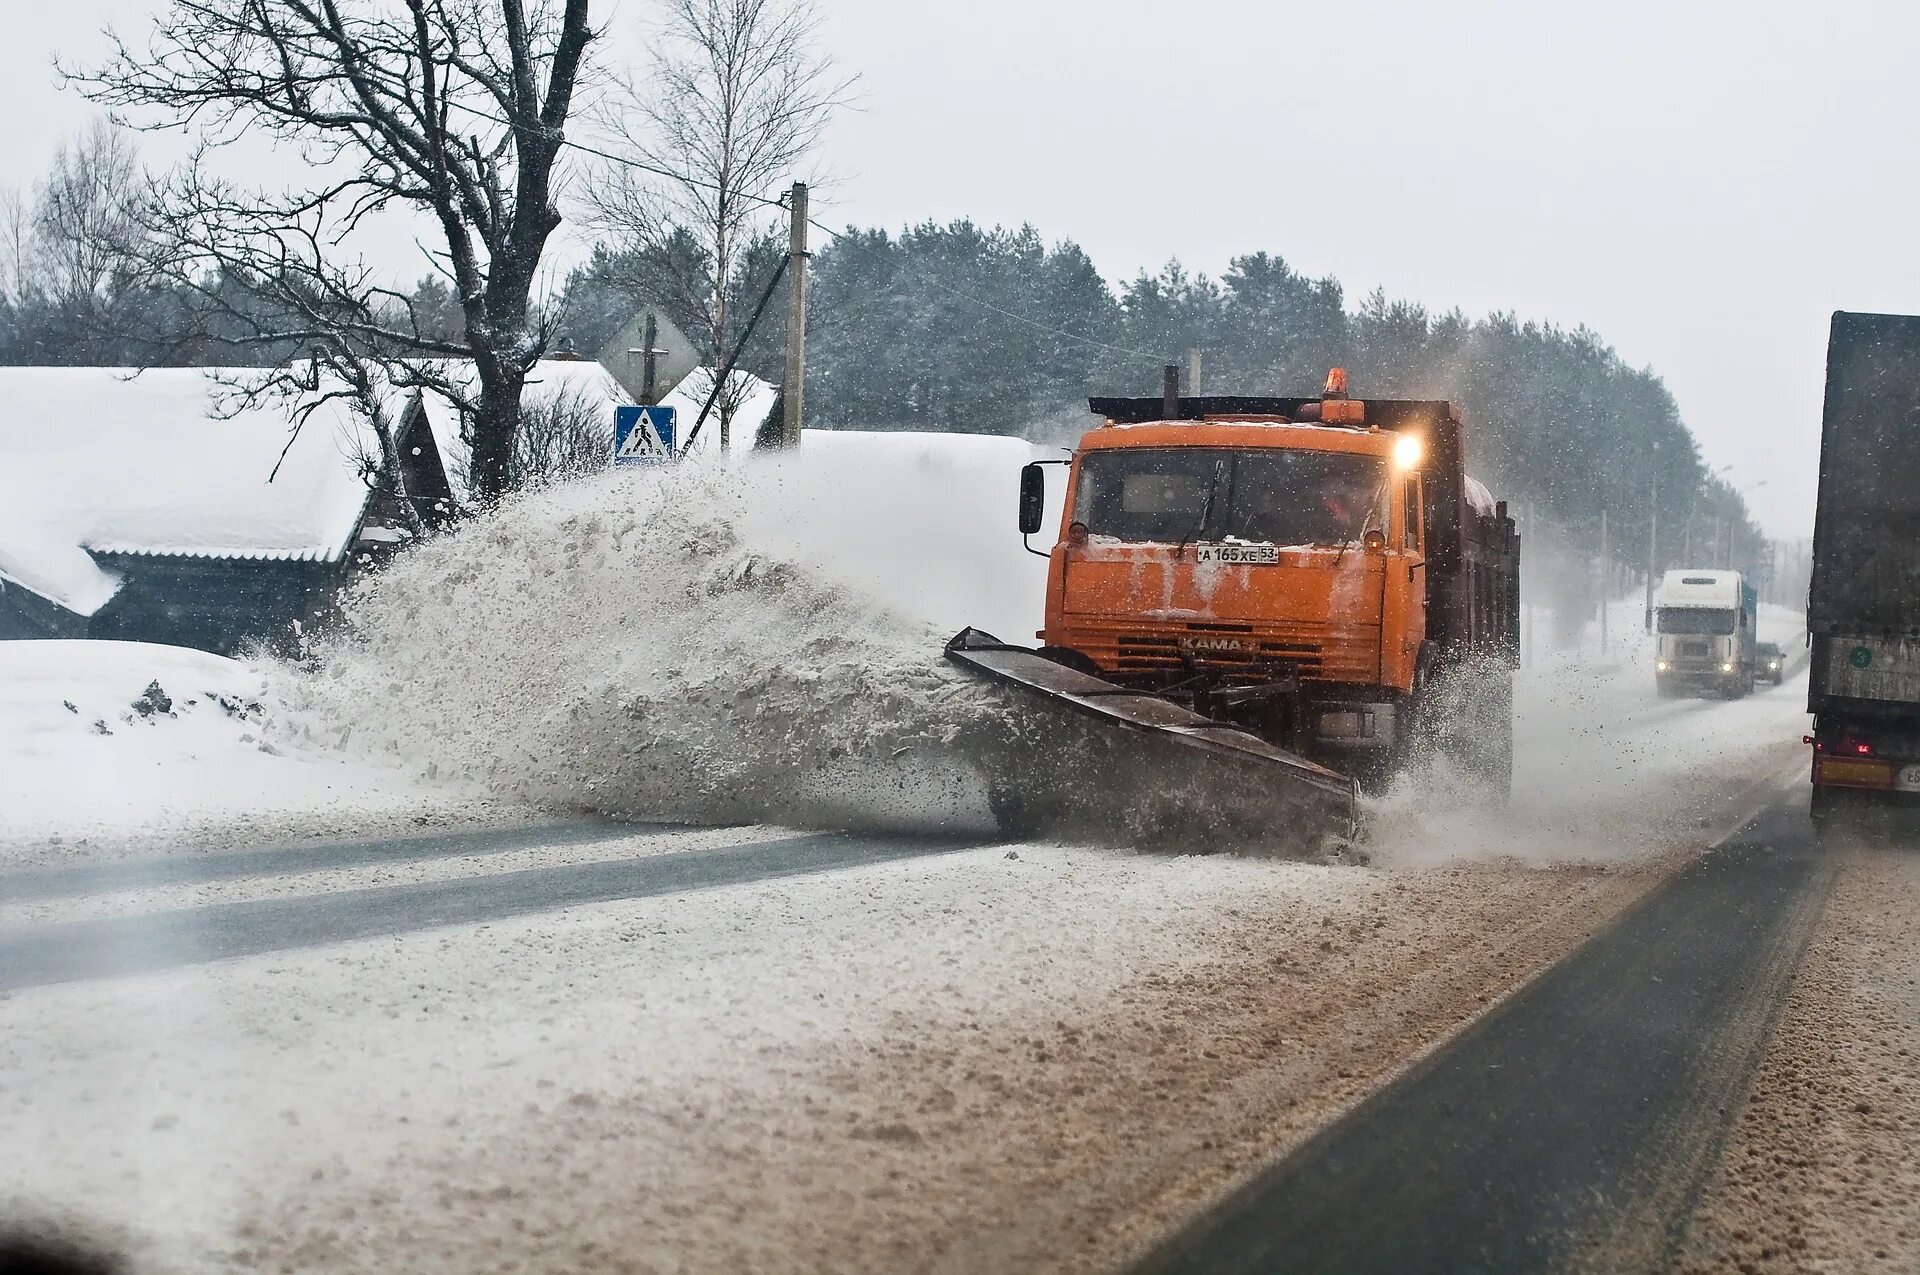 Дорога очищена от снега. Уборка снега на дорогах. Расчистка дорог от снега. Очистка снега дороги. Дорожная служба.